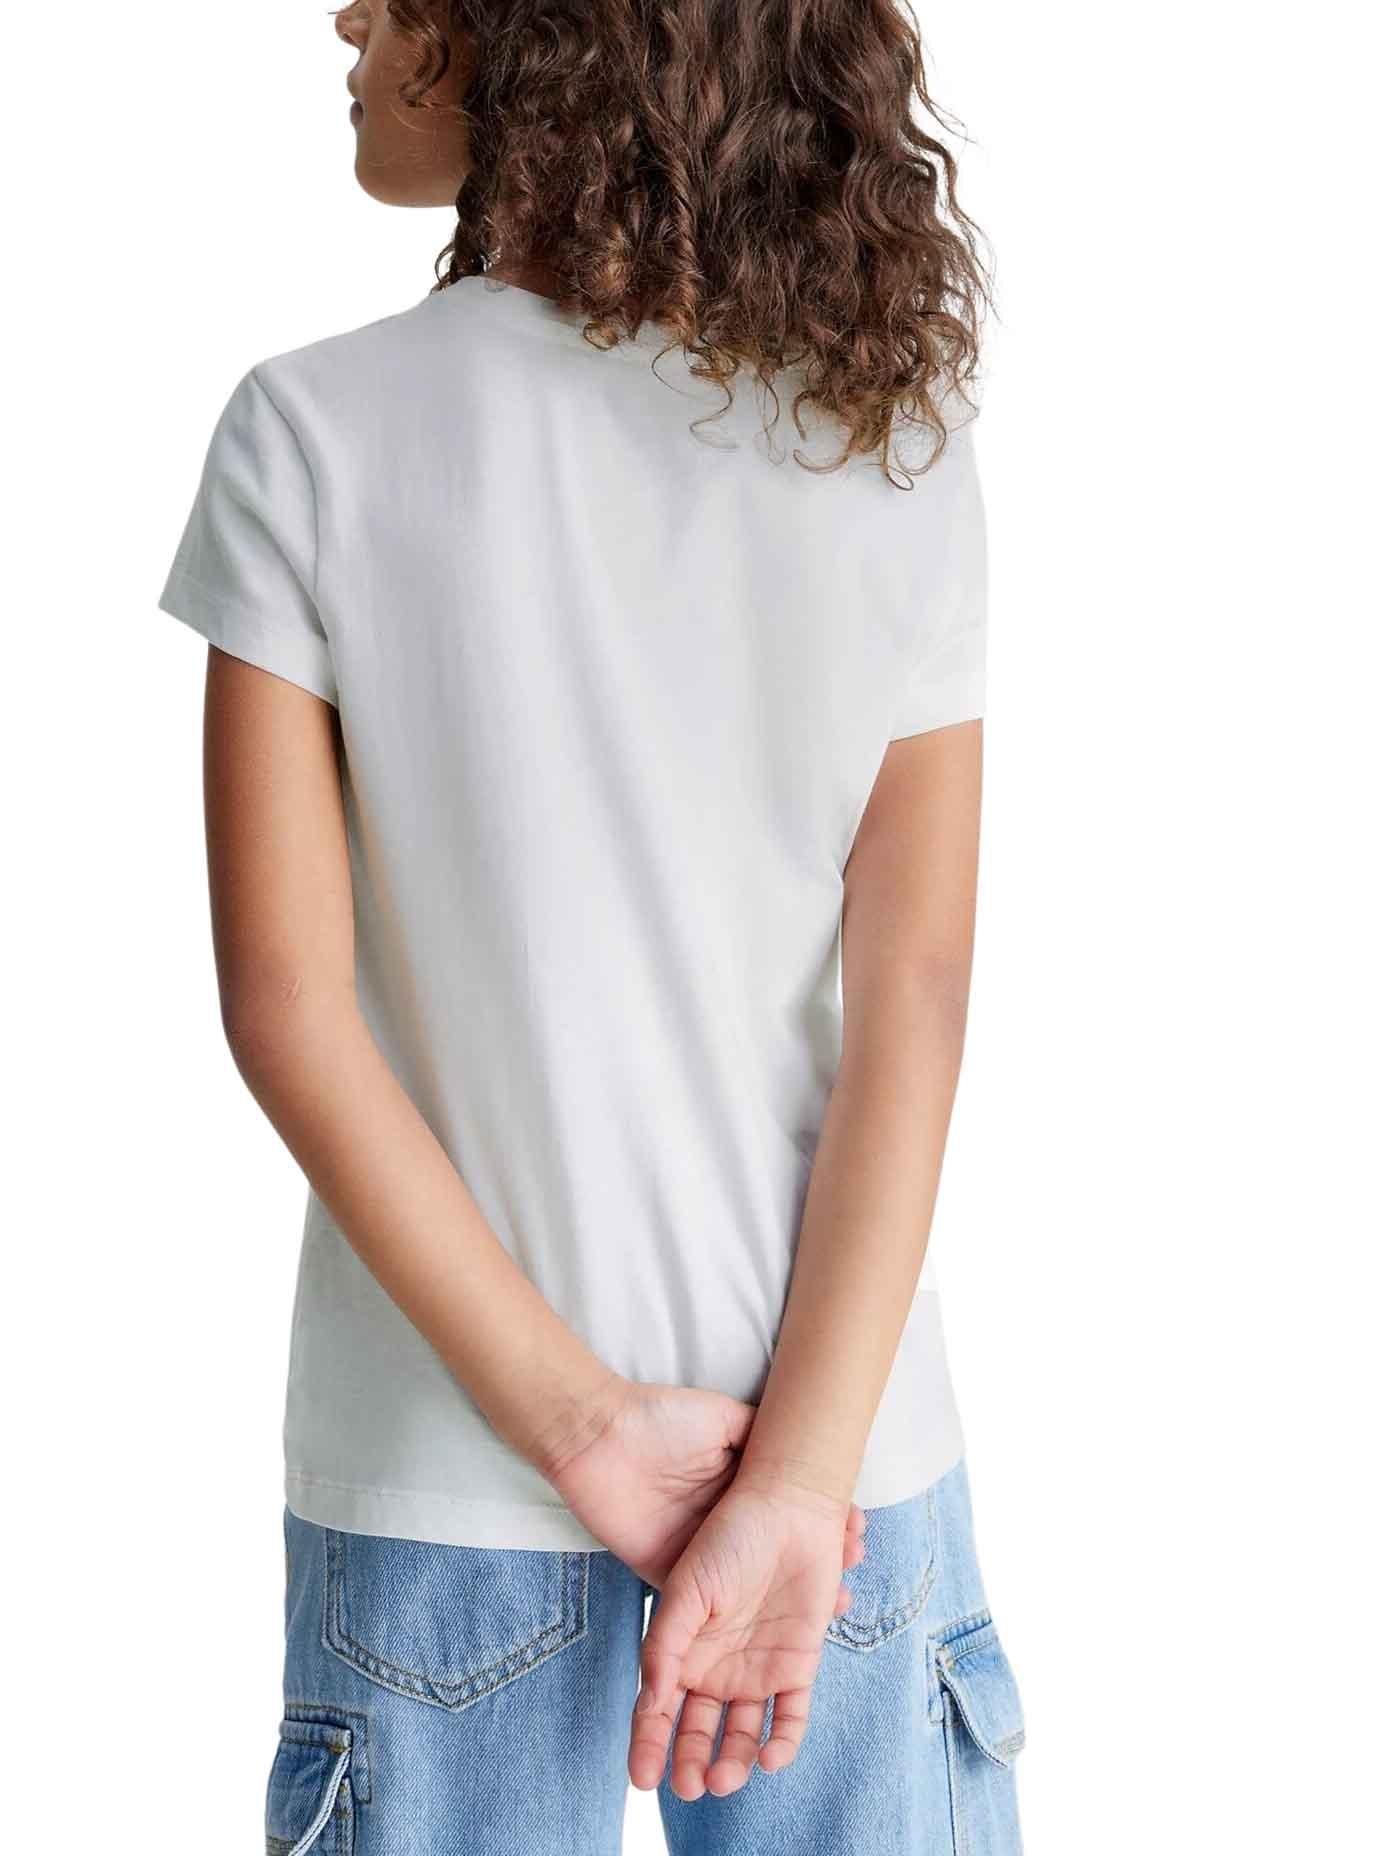 T-Shirt Calvin Klein Micro Monogram Bianco Bambina